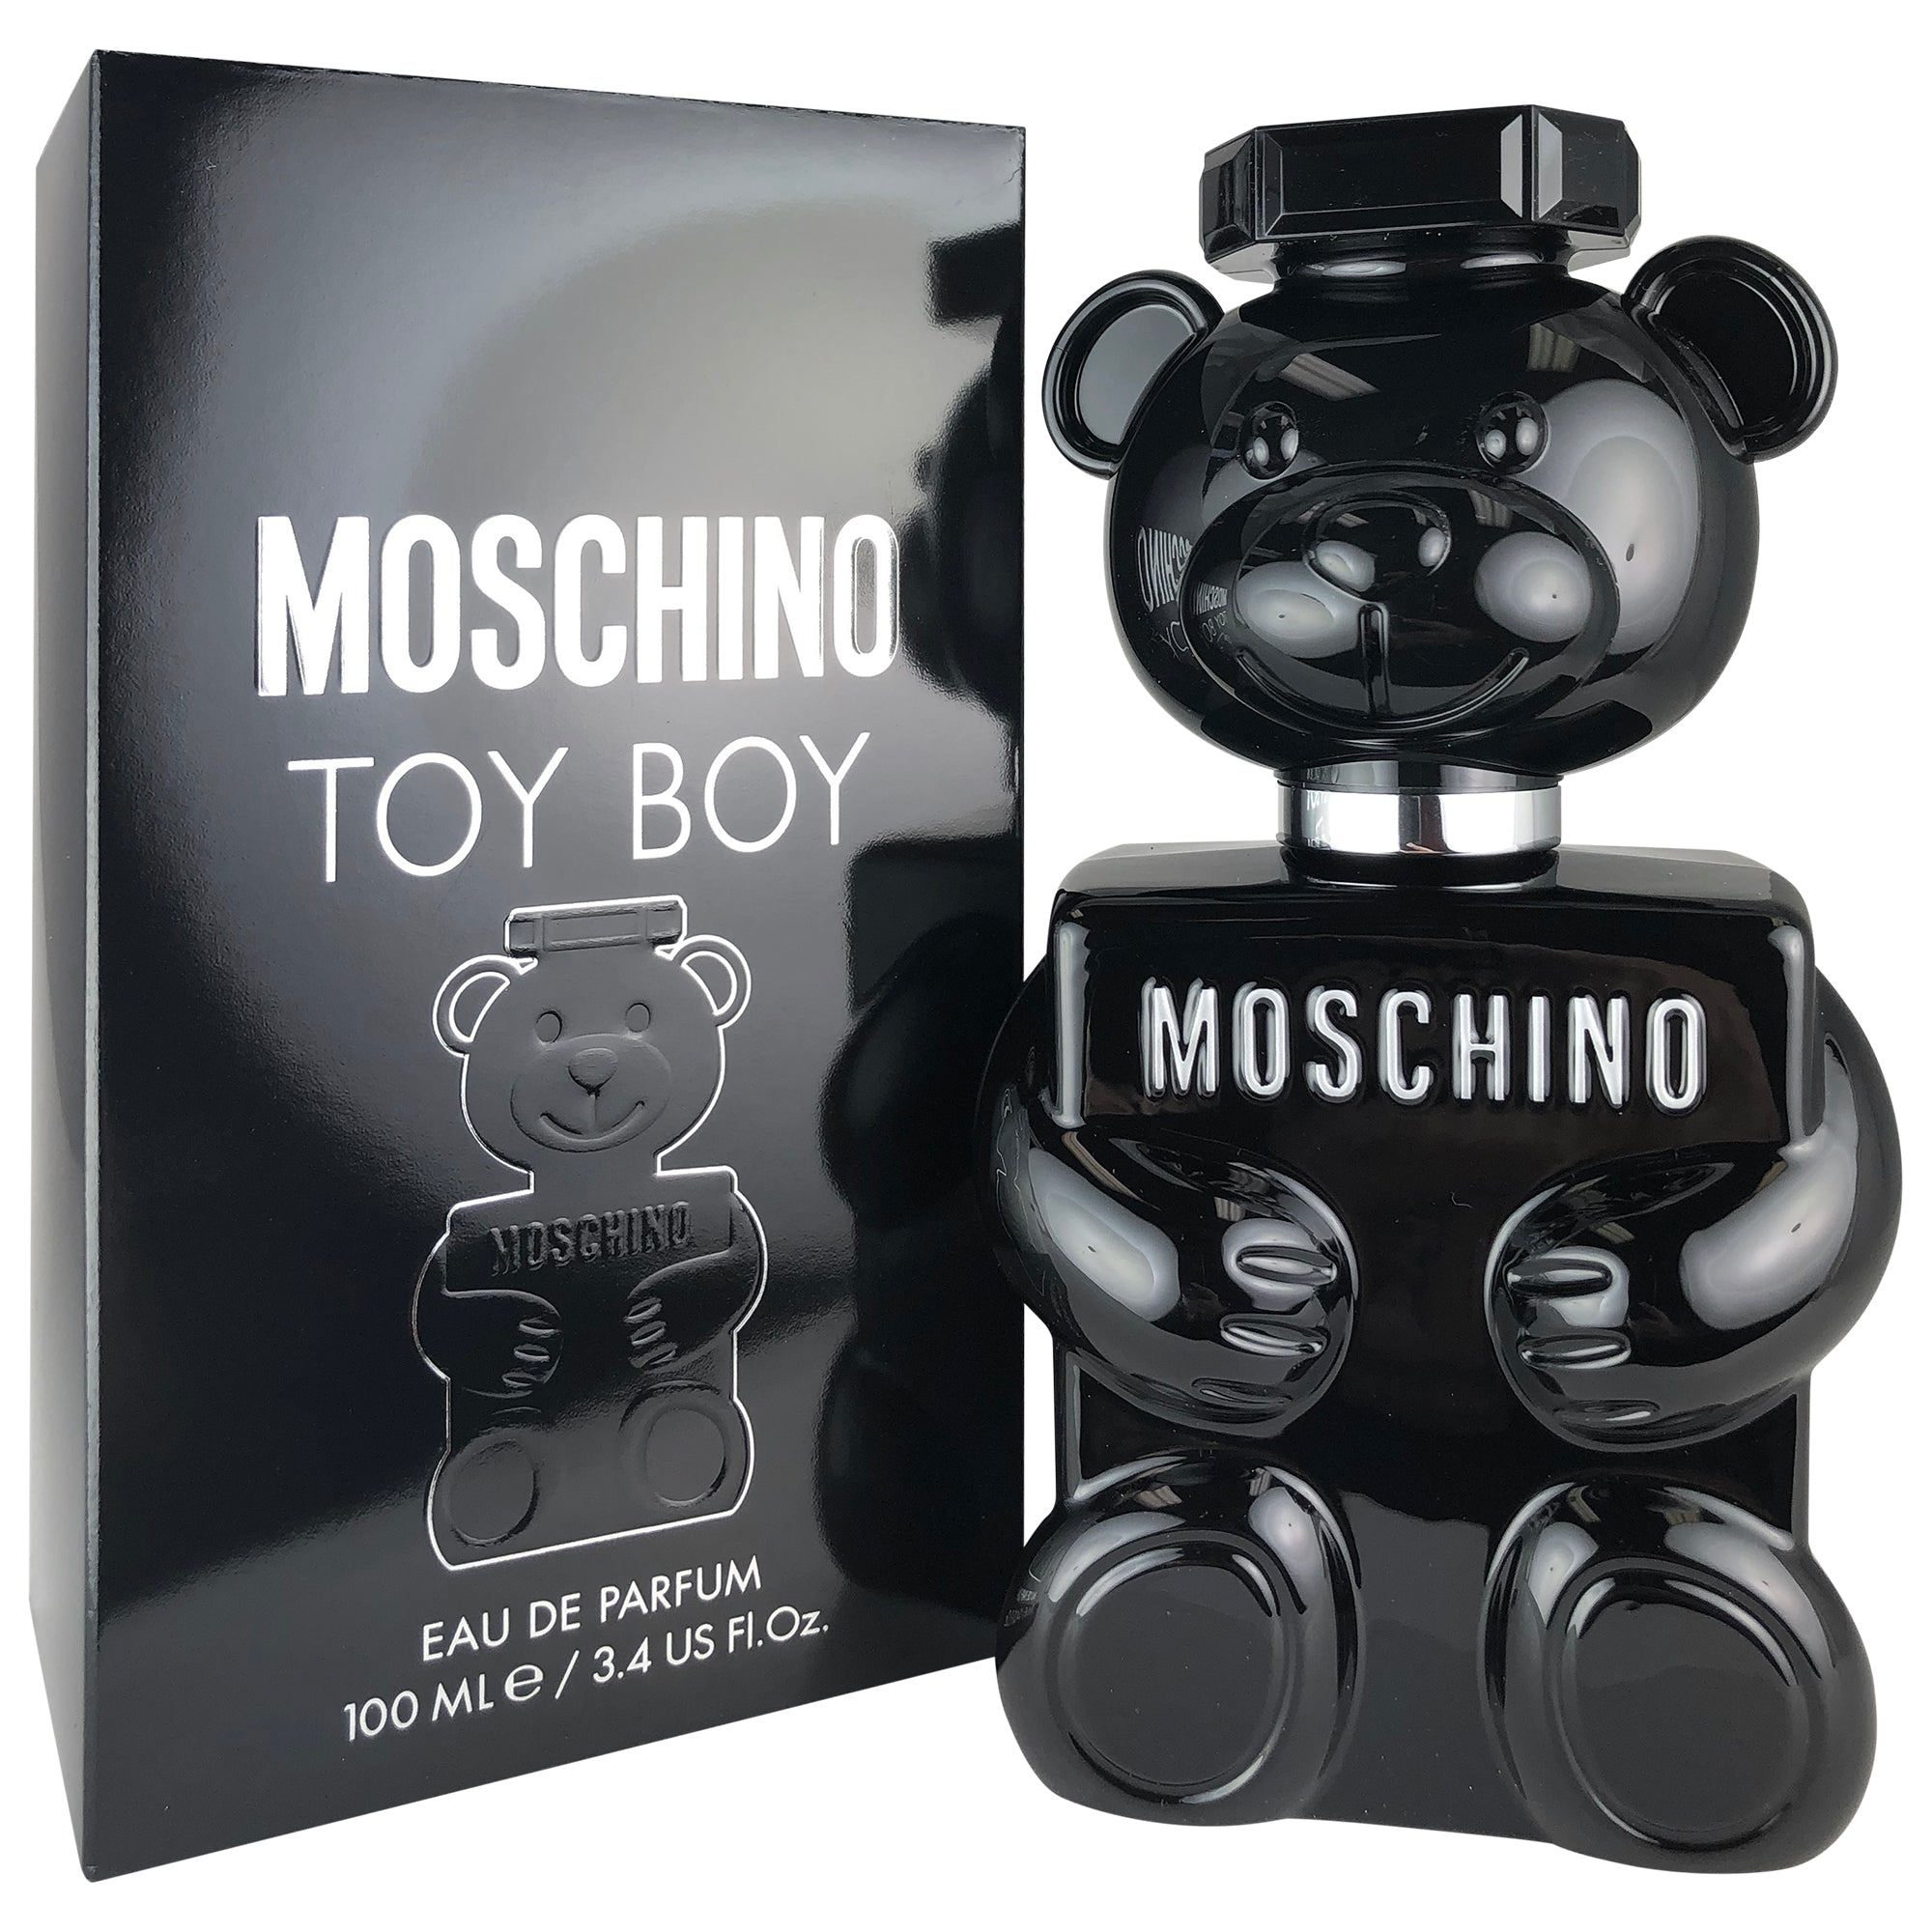 Moschino Toy Boy Eau de Parfum for Men